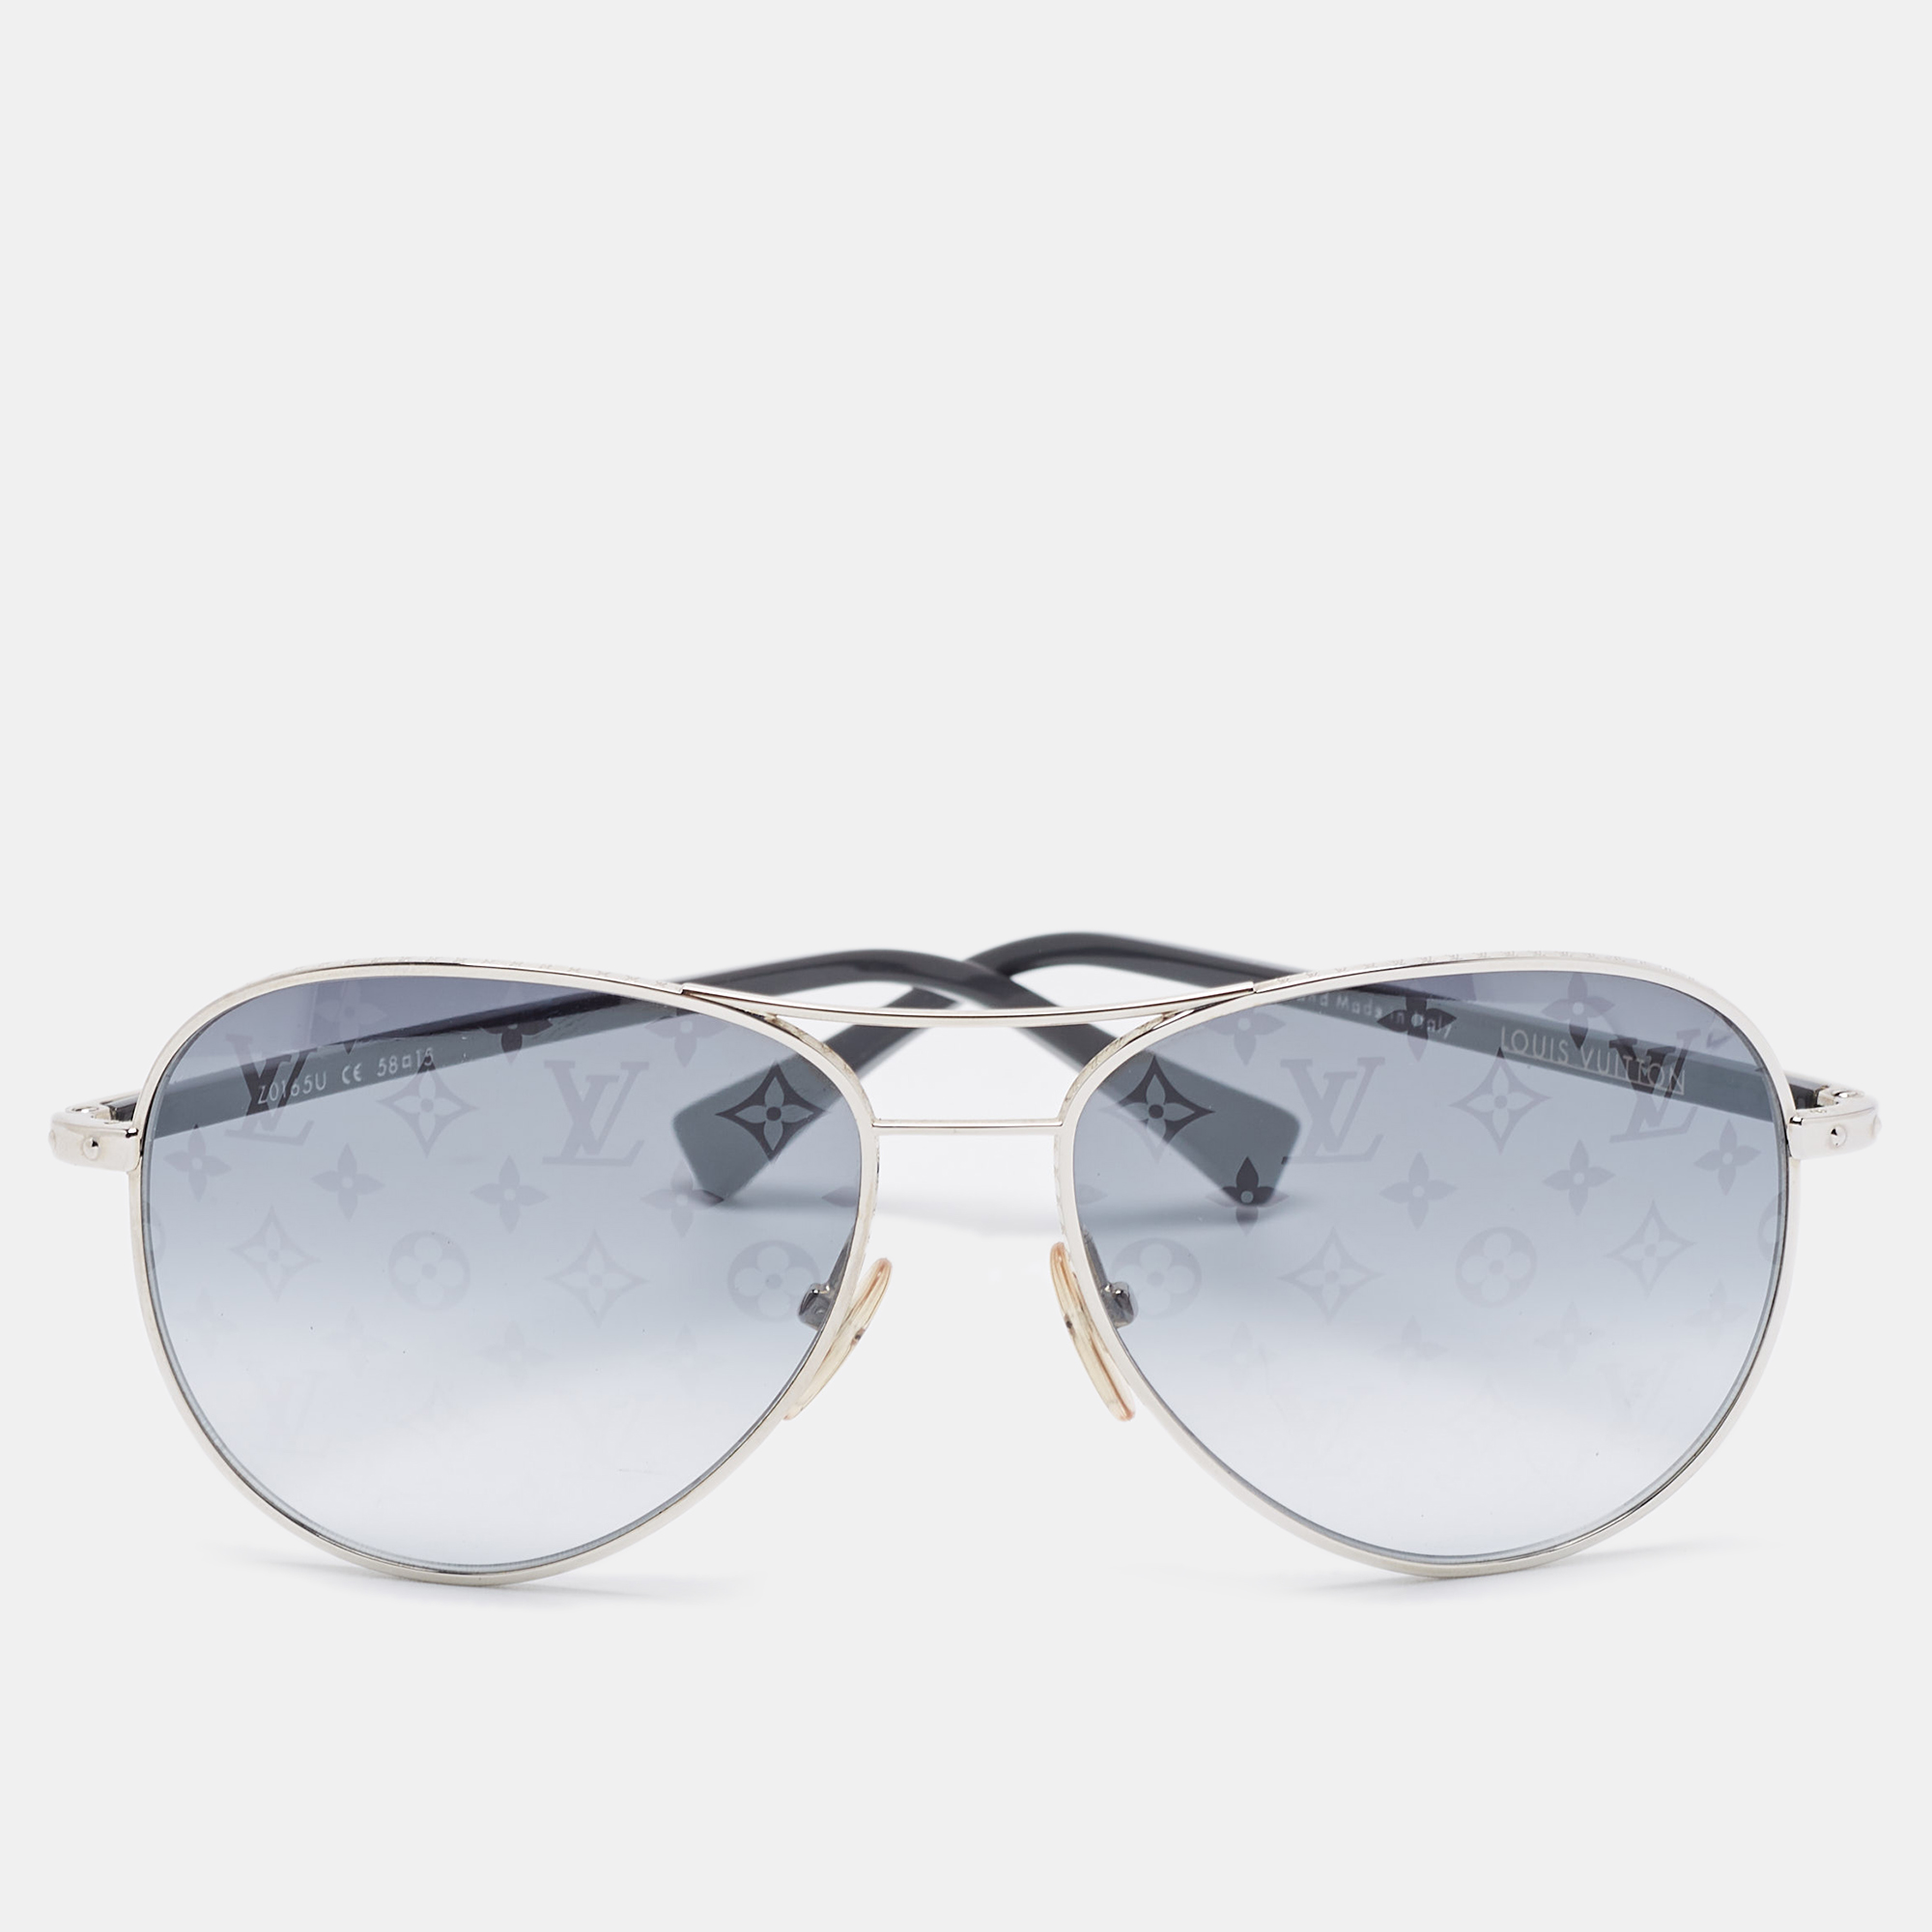 Sunglasses Louis Vuitton Brown in Plastic - 34846414